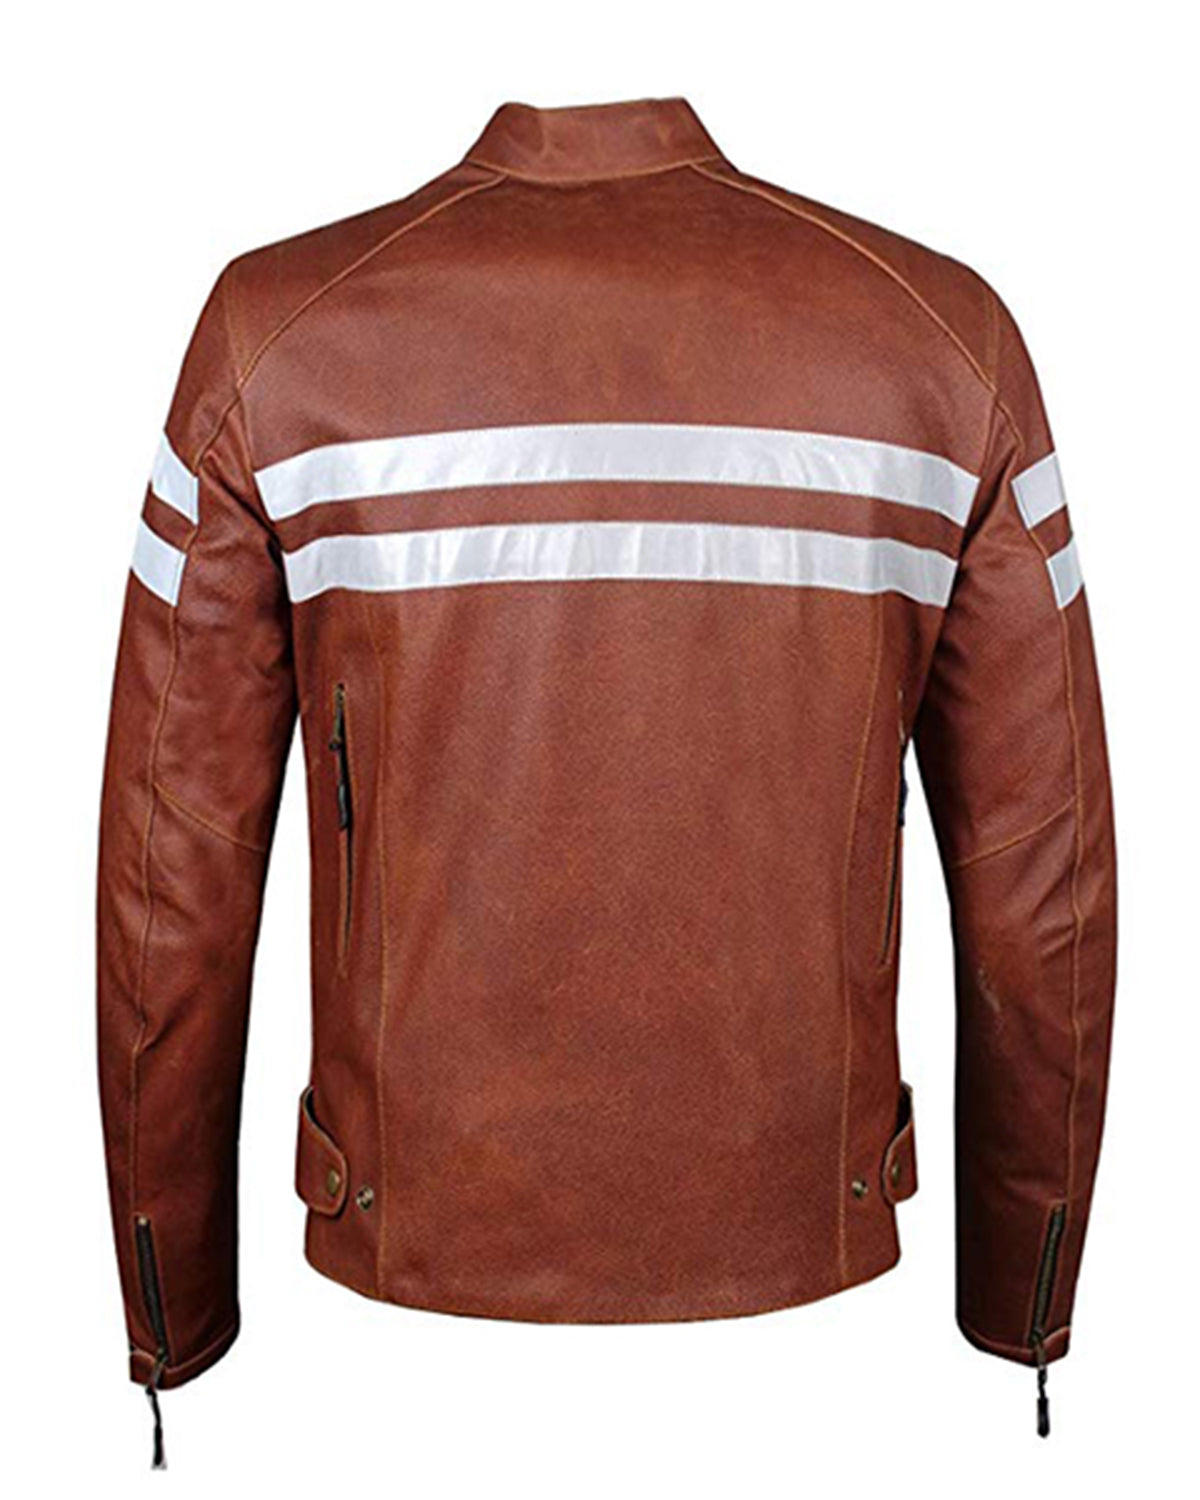 Elite Brown Motorcycle Biker Vintage Leather Jacket For Mens